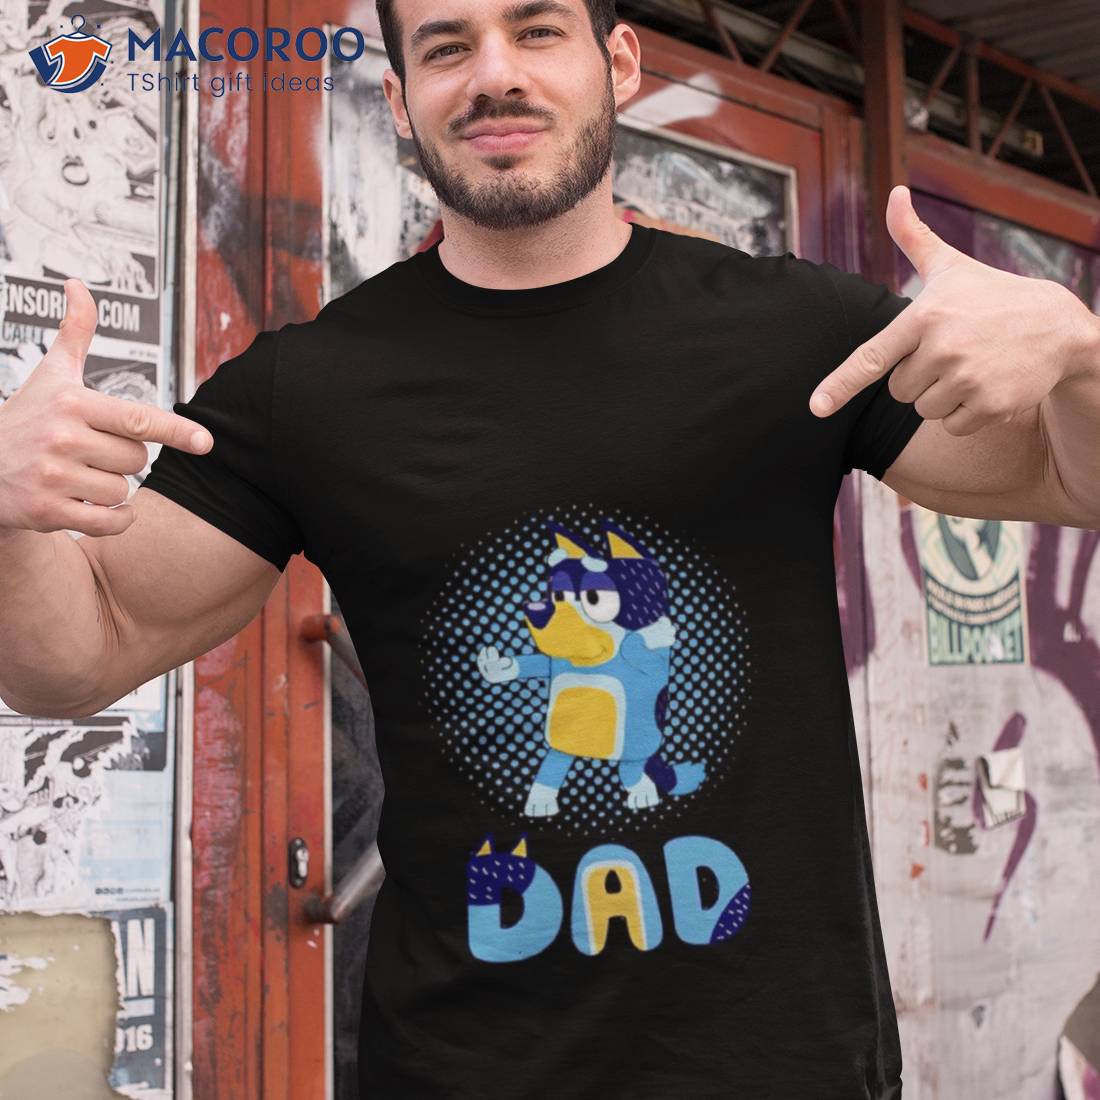 Bluey Dad Long Sleeve T-Shirt Adult